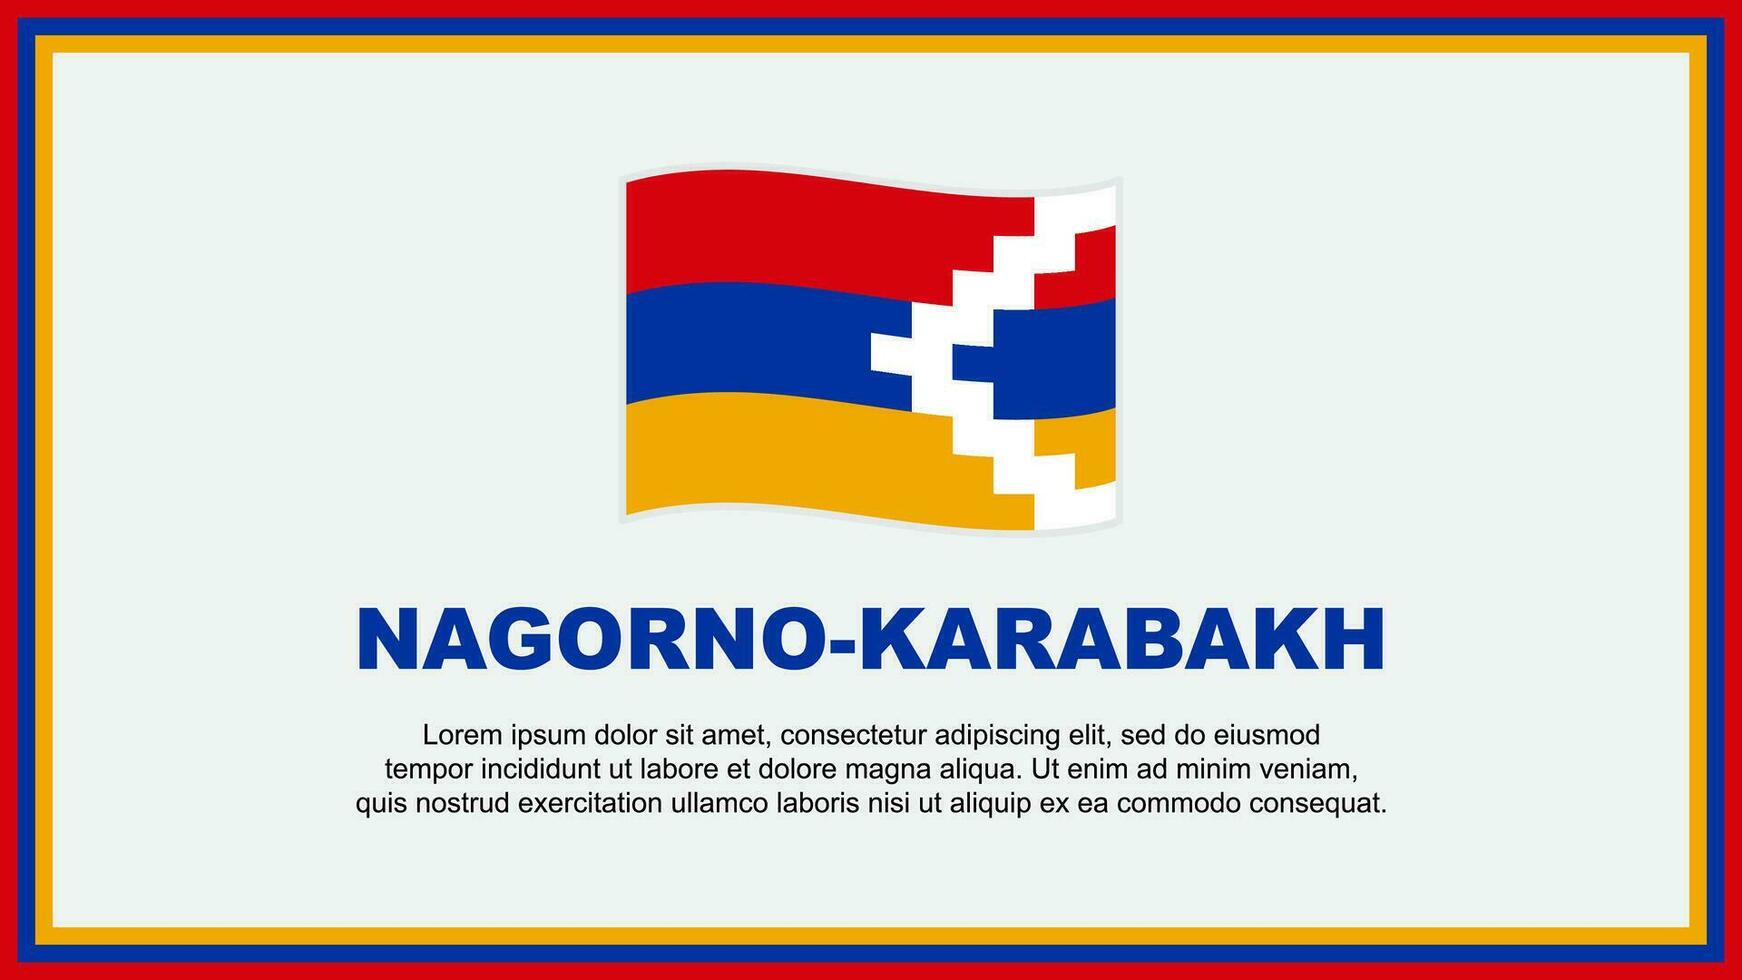 Nagorno Karabakh Flag Abstract Background Design Template. Nagorno Karabakh Independence Day Banner Social Media Vector Illustration. Nagorno Karabakh Banner